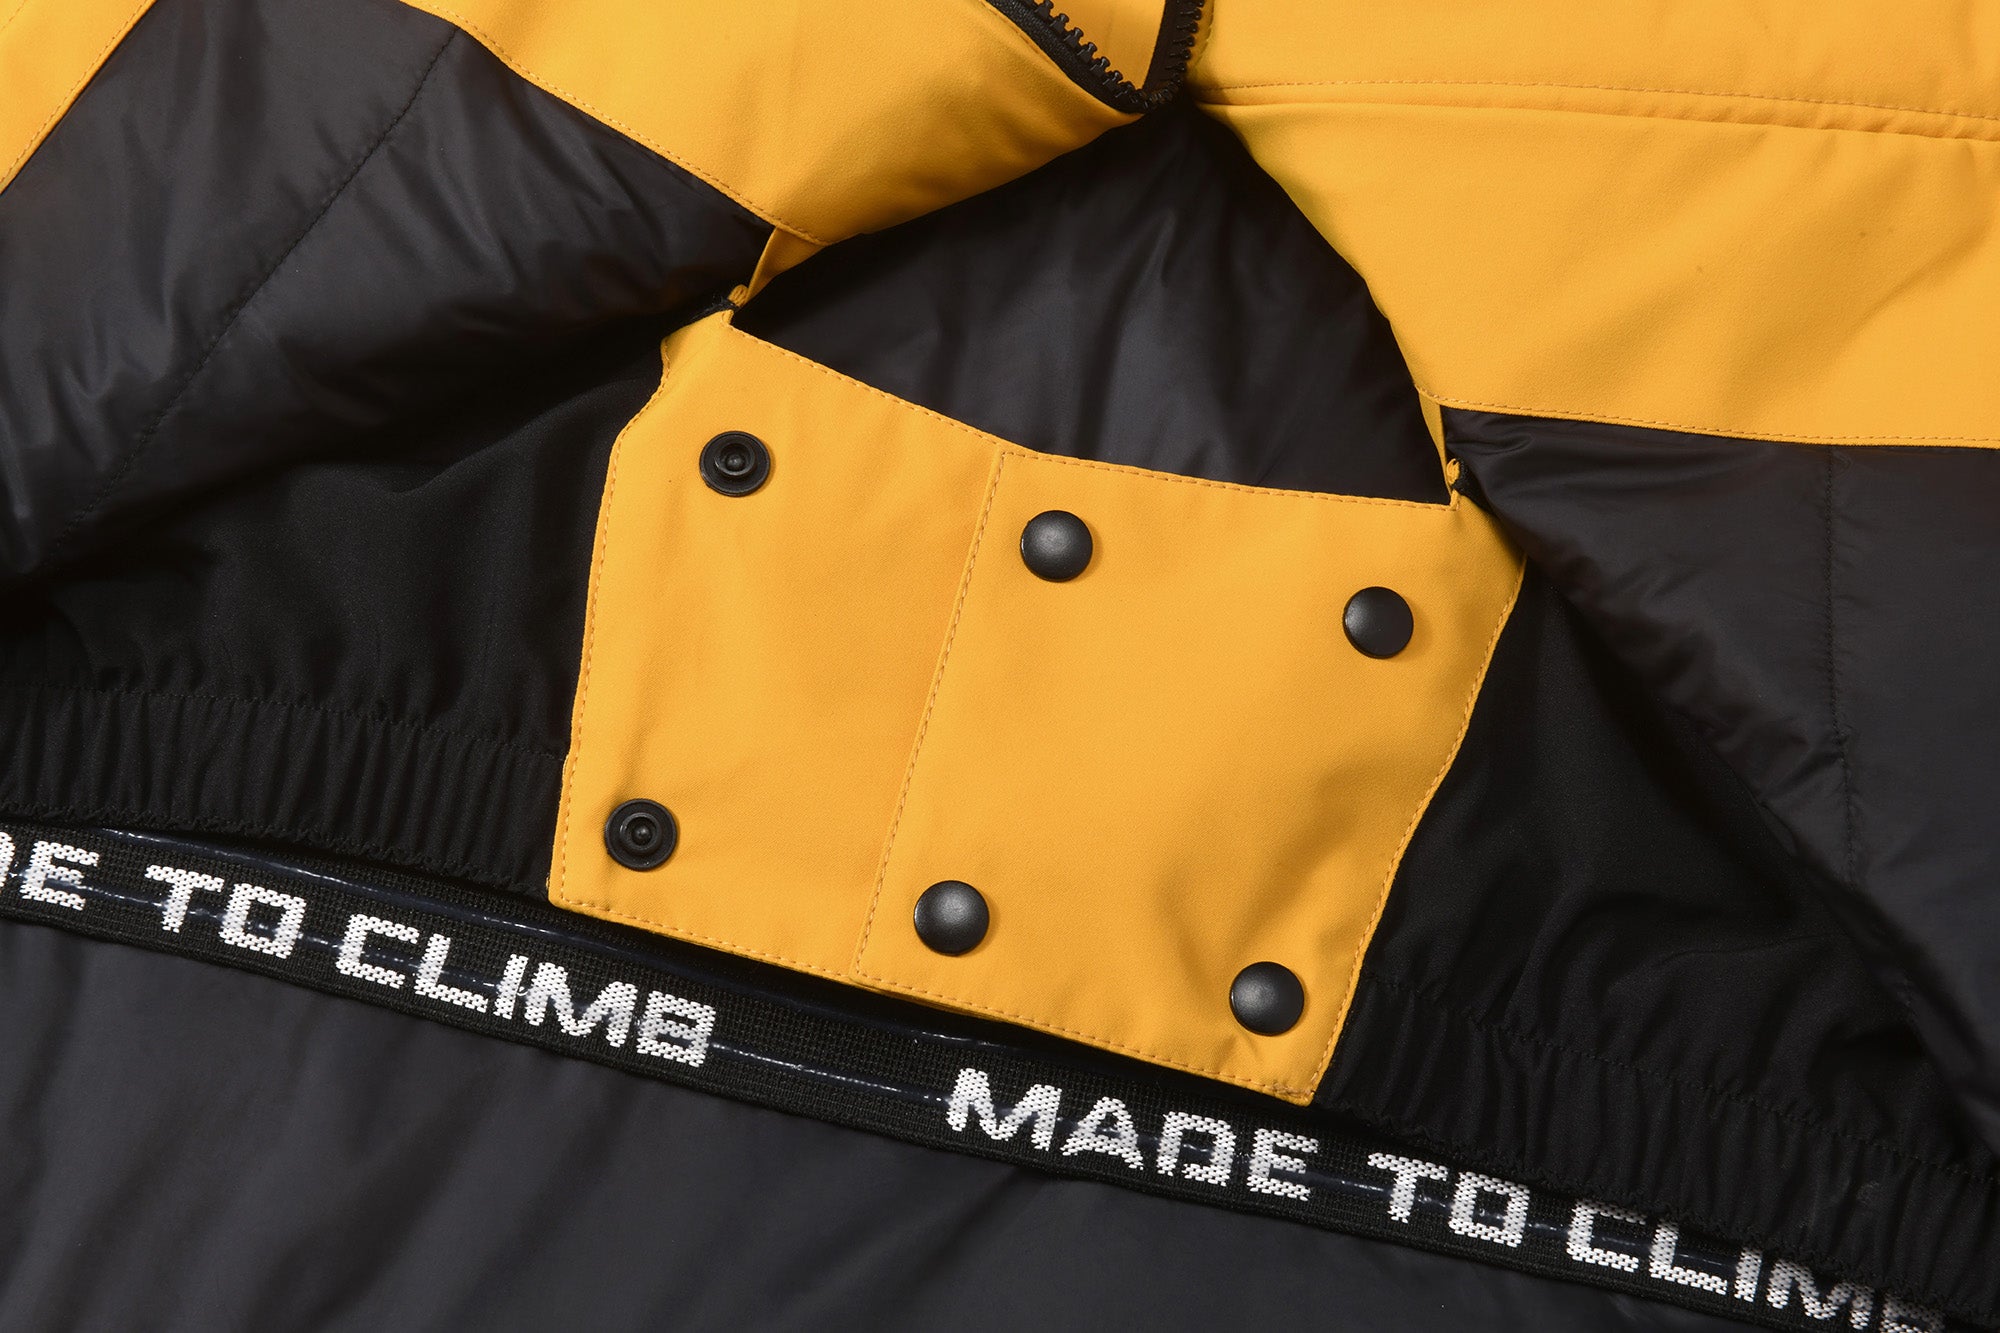 Kailas MONT Plus GORE-TEX PrimaLoft Waterproof Hardshell Jacket for 5000 to 6000m peaks